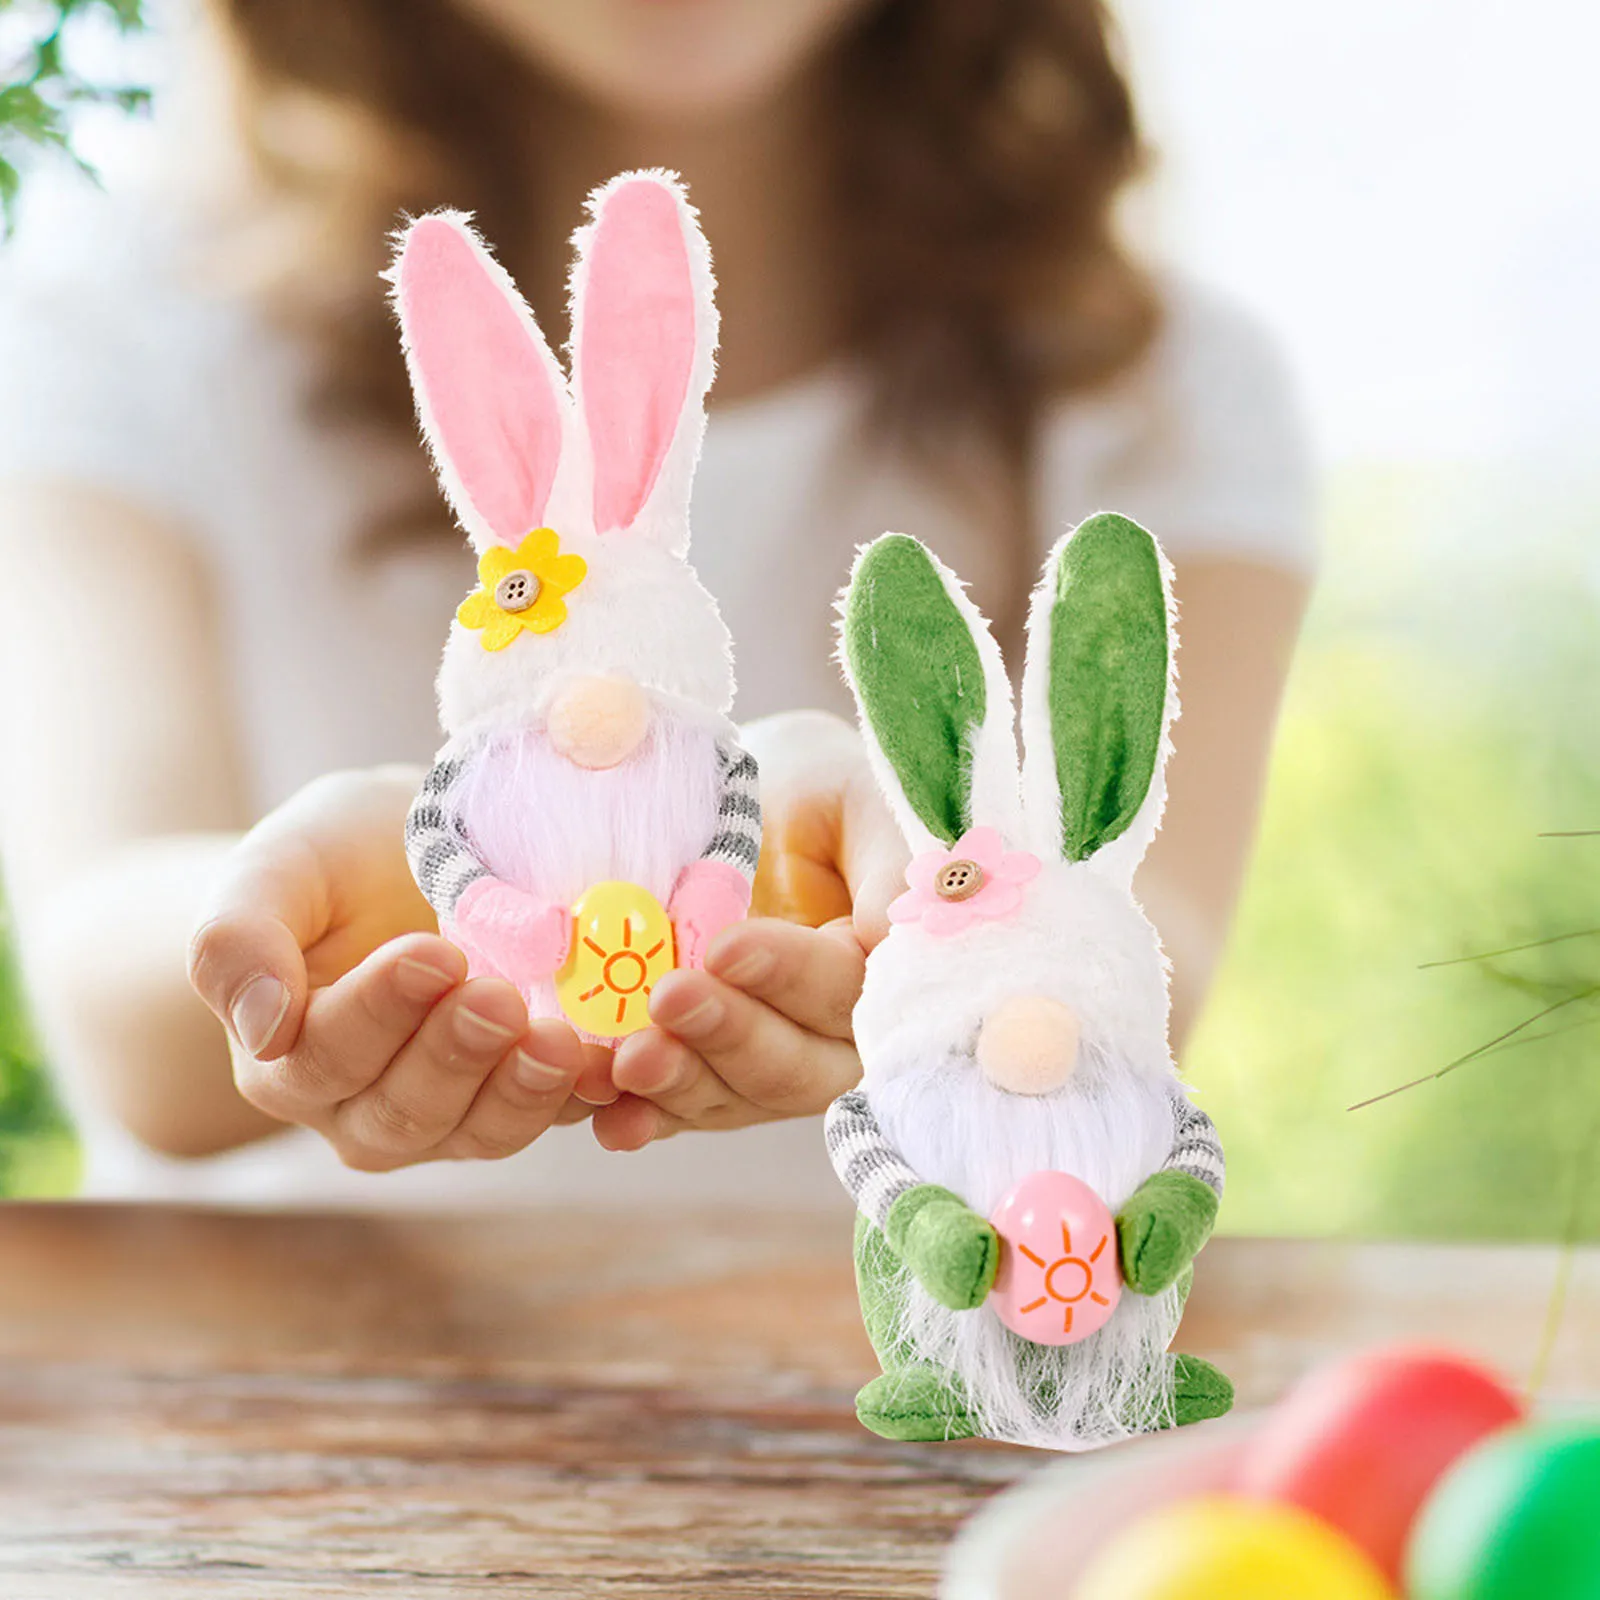 

Children's toys Easter cartoon bunny shape cute faceless dolls living room decoration ornaments 2PC мягкие игѬђки болие 40*